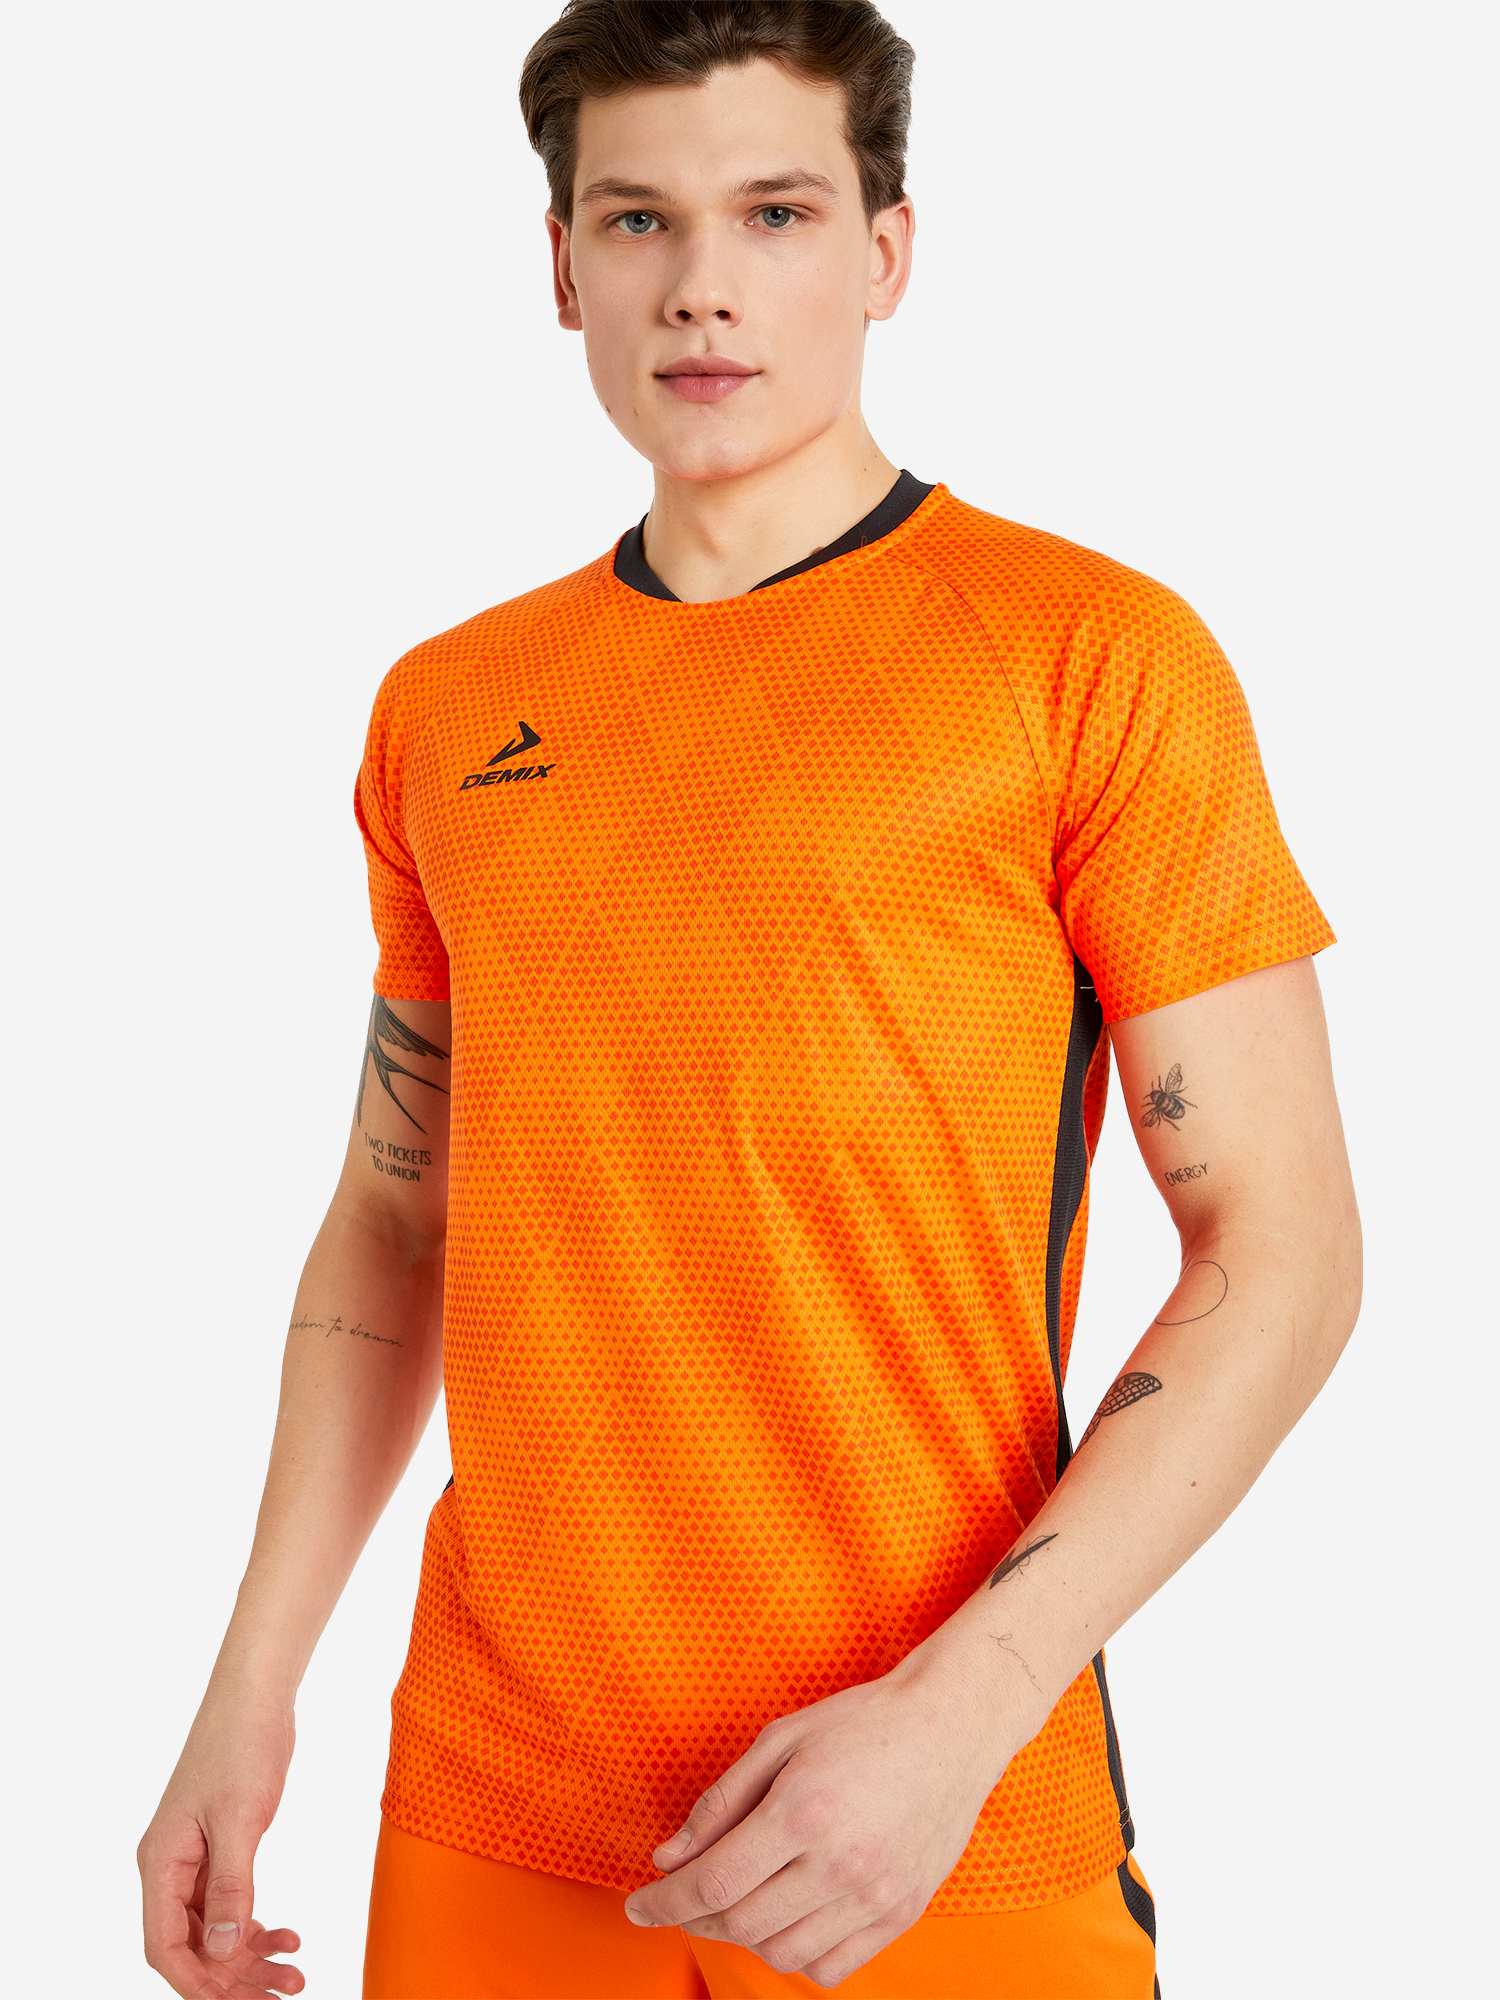 Футболка мужская Demix Strike, Оранжевый футболка для мальчиков demix strike оранжевый